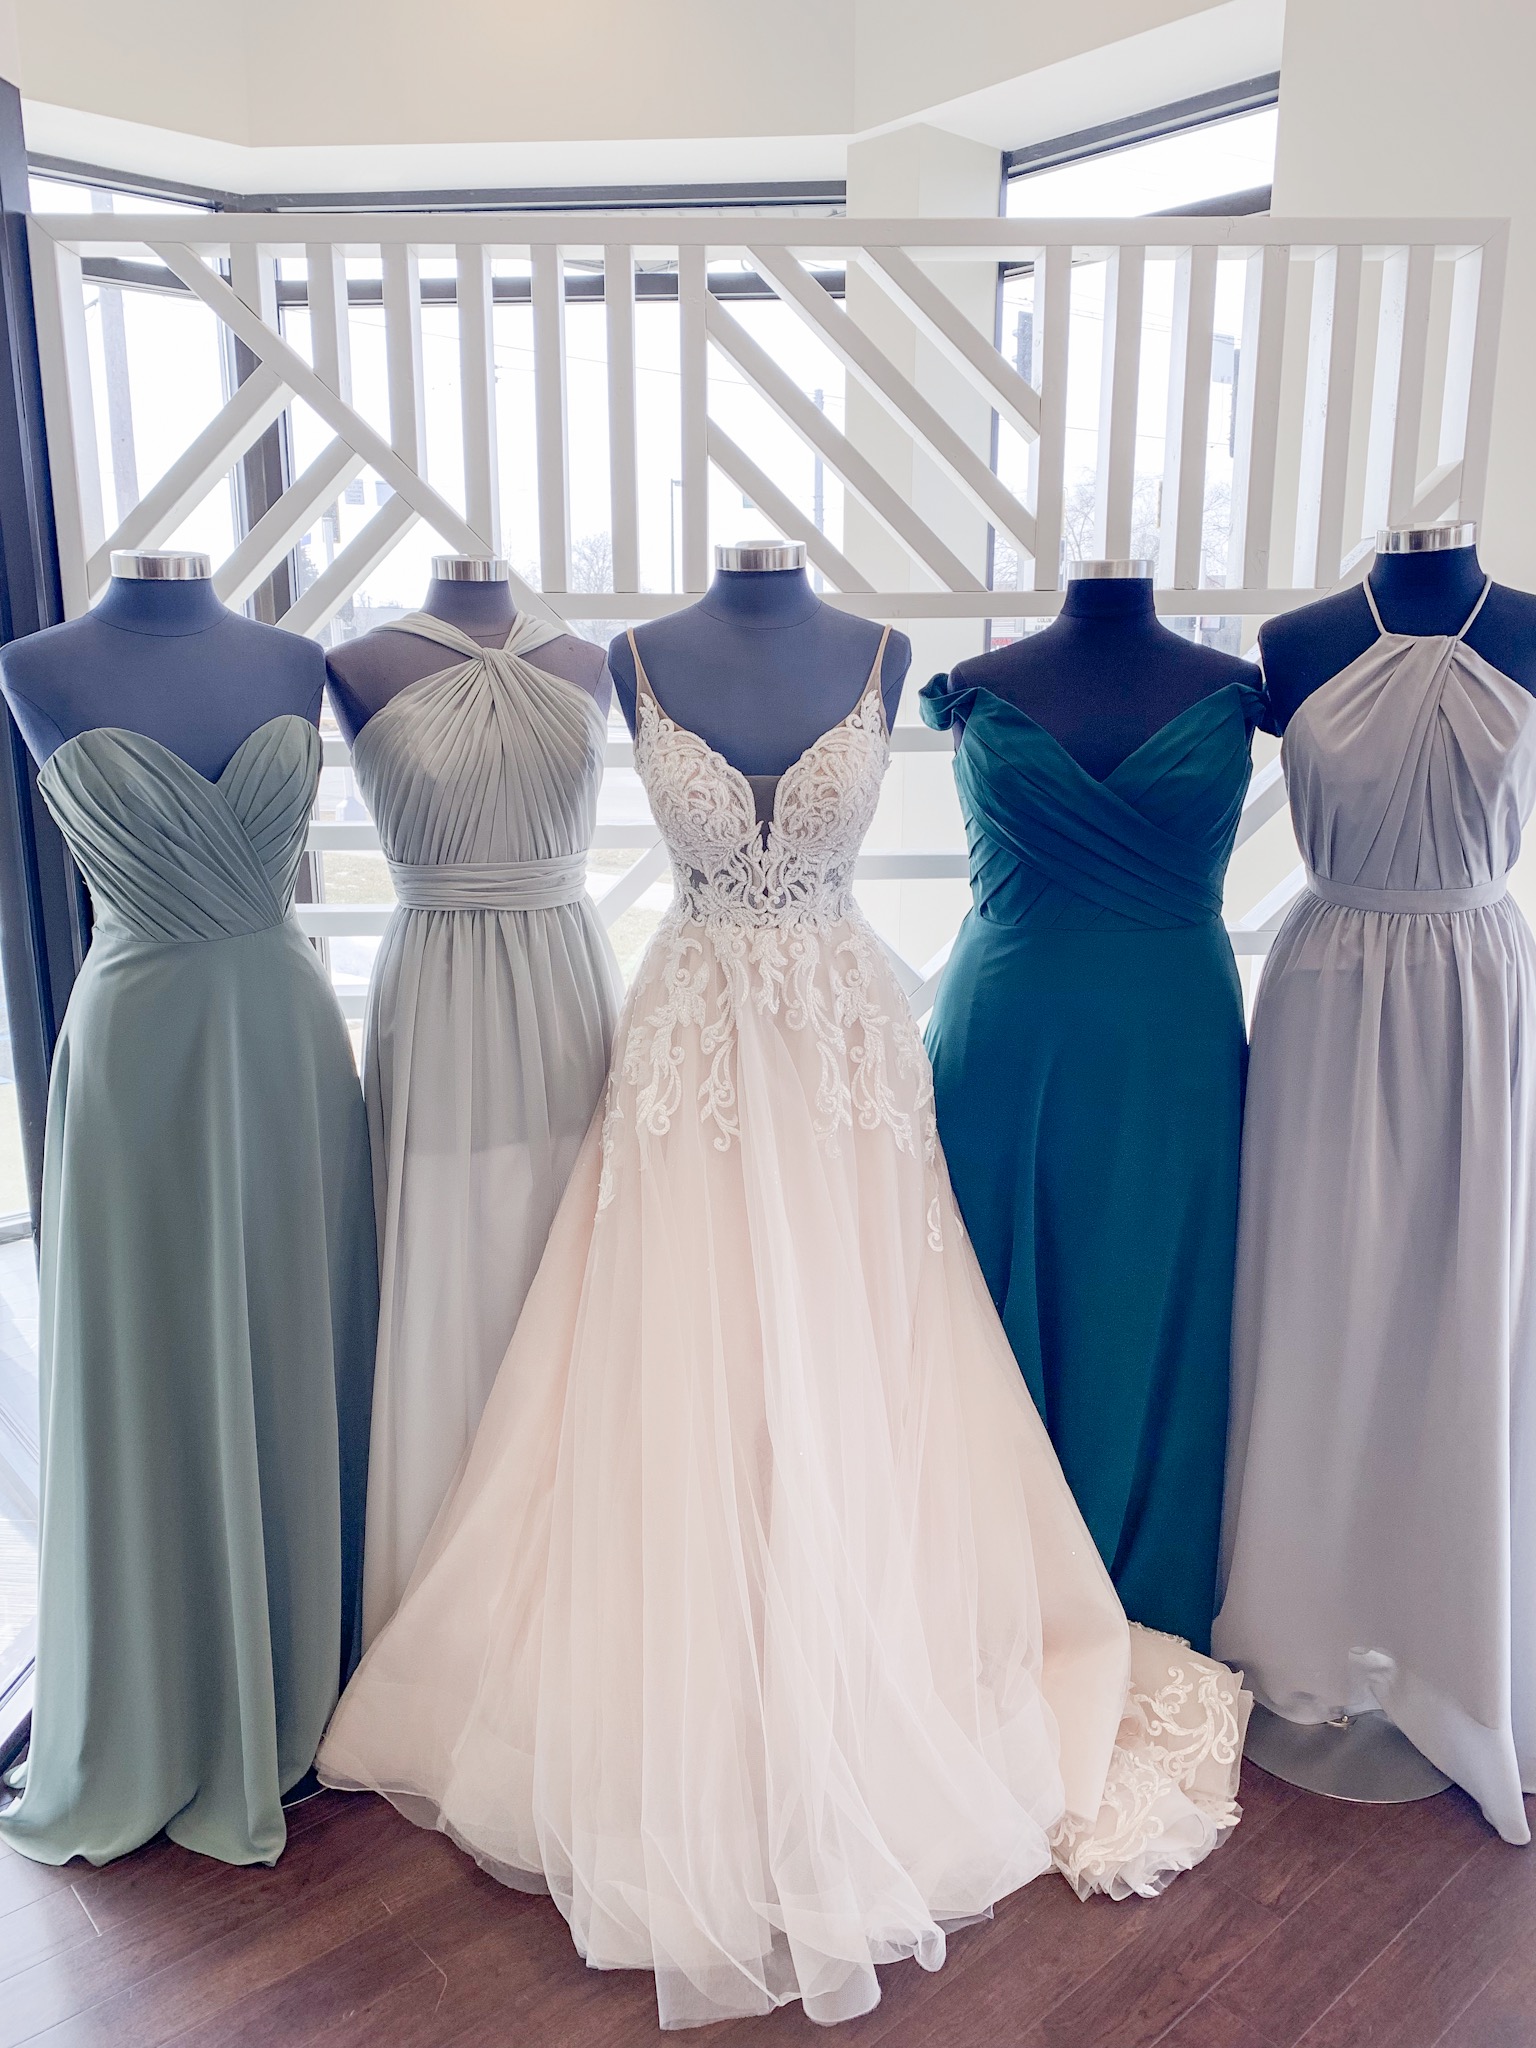 moscato wedding dress with bridesmaids